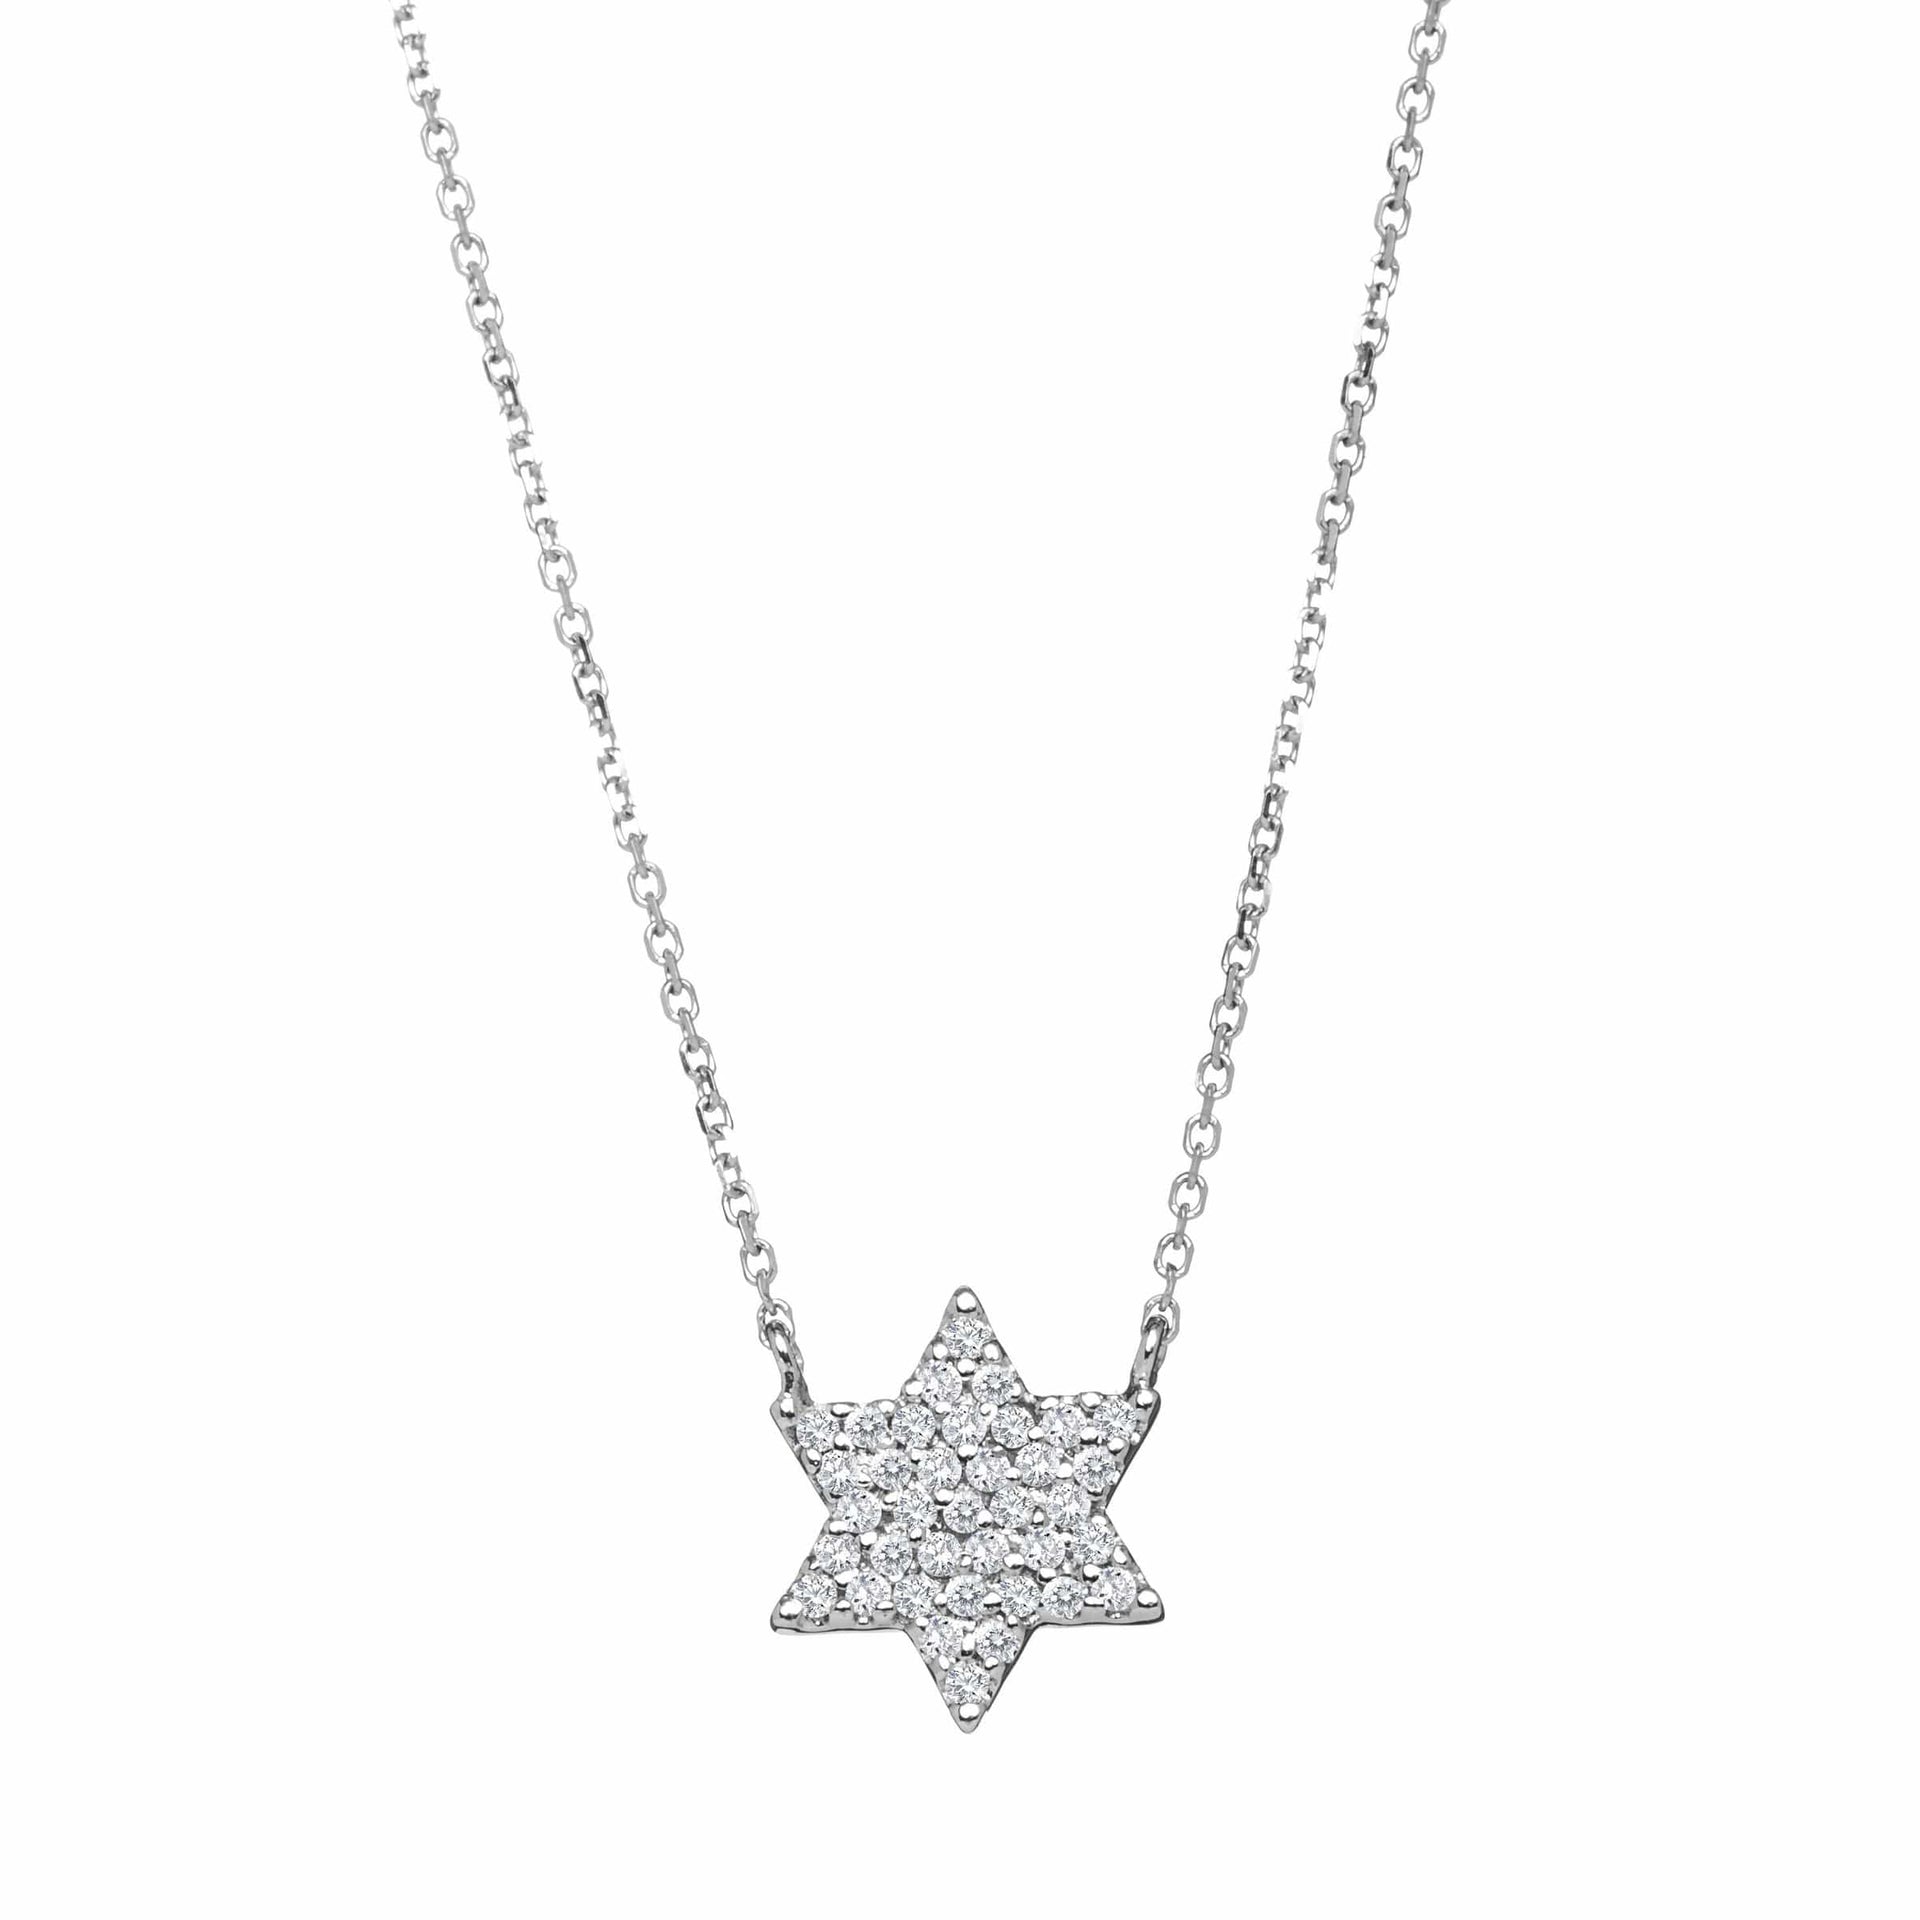 Alef Bet Necklaces White Gold Diamond Star of David Necklace - Gold, White Gold or Rose Gold